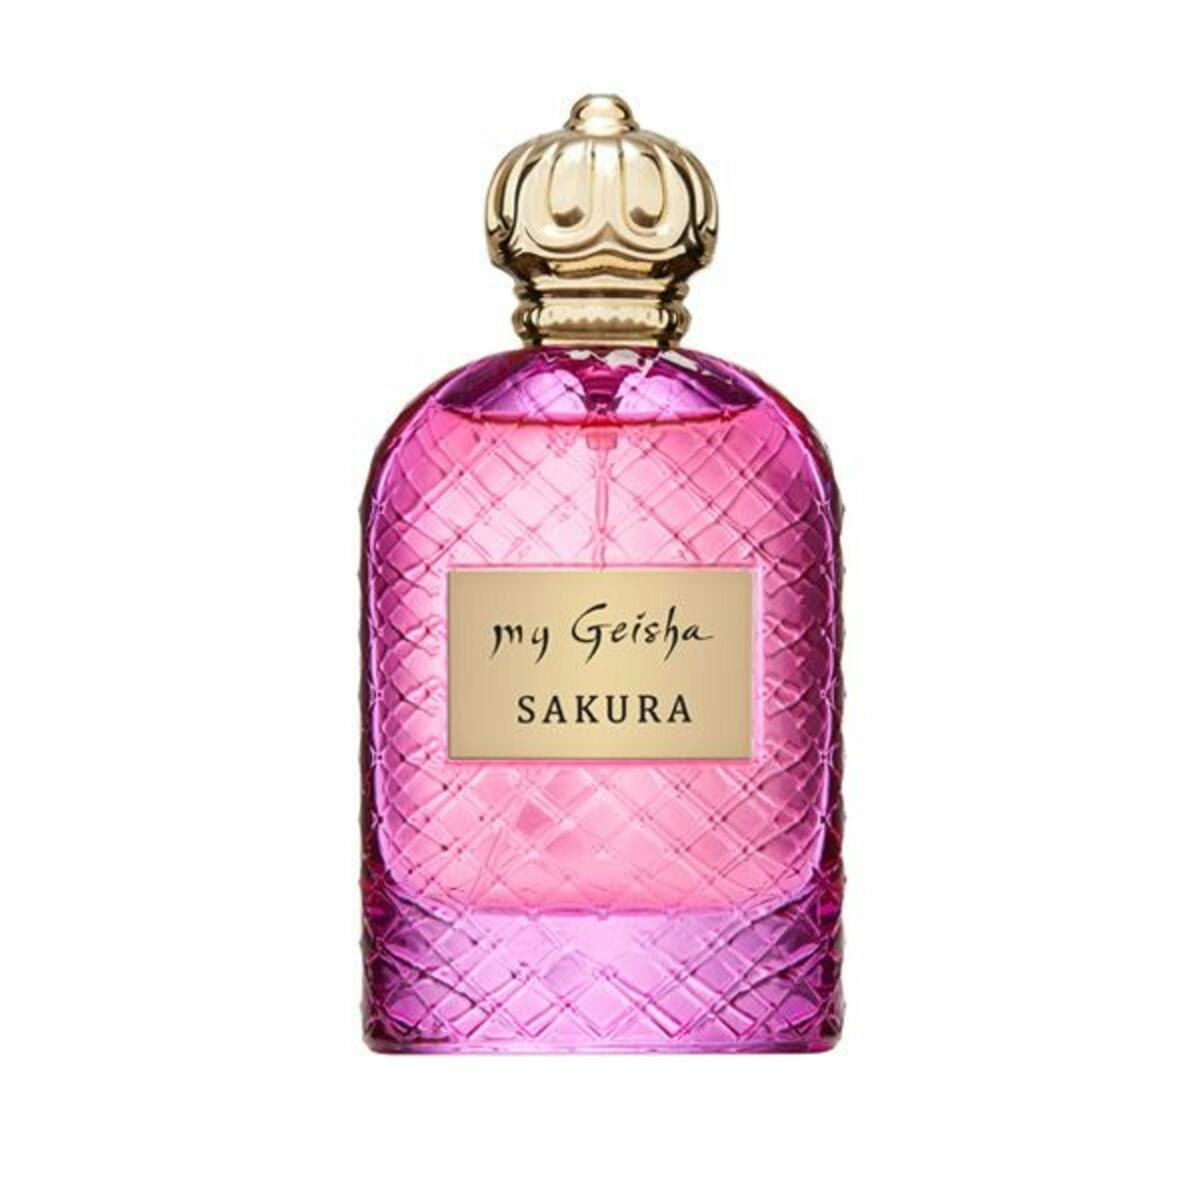 Extrait de parfum SAKURA 100 ml, produit artisanal en vente directe en Suisse